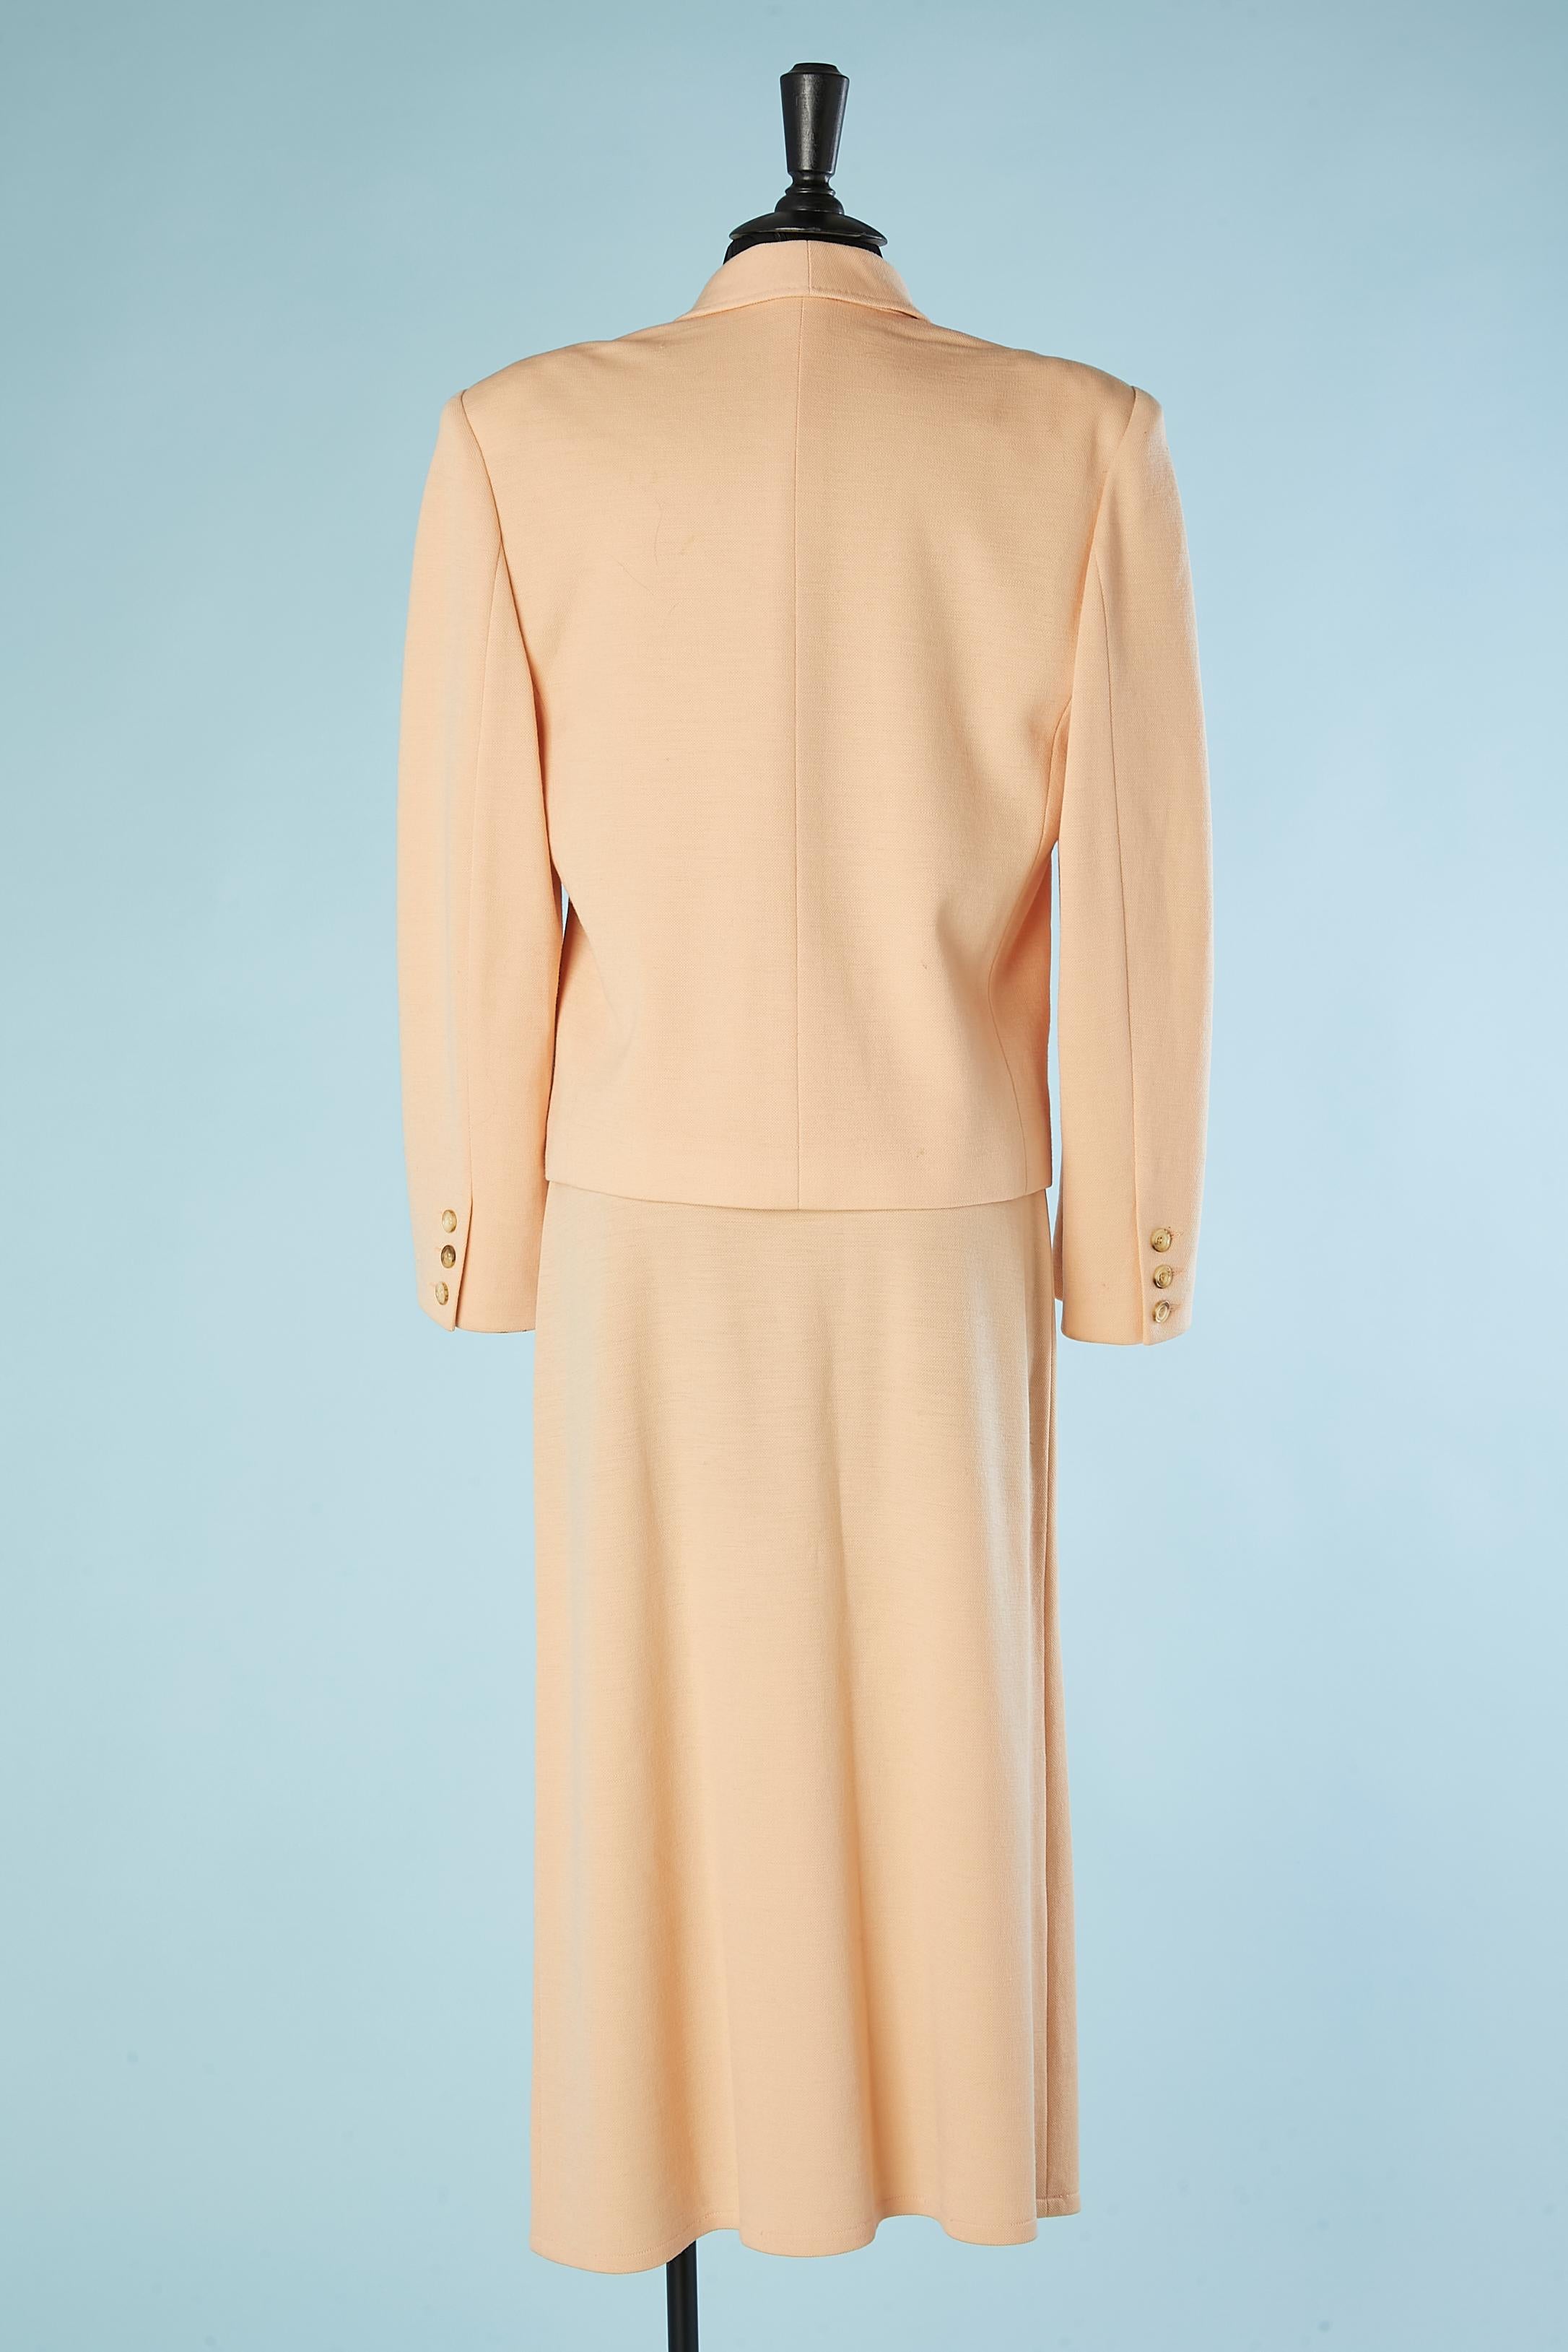 Pale pink wool jersey skirt-suit Sonia Rykiel  For Sale 1